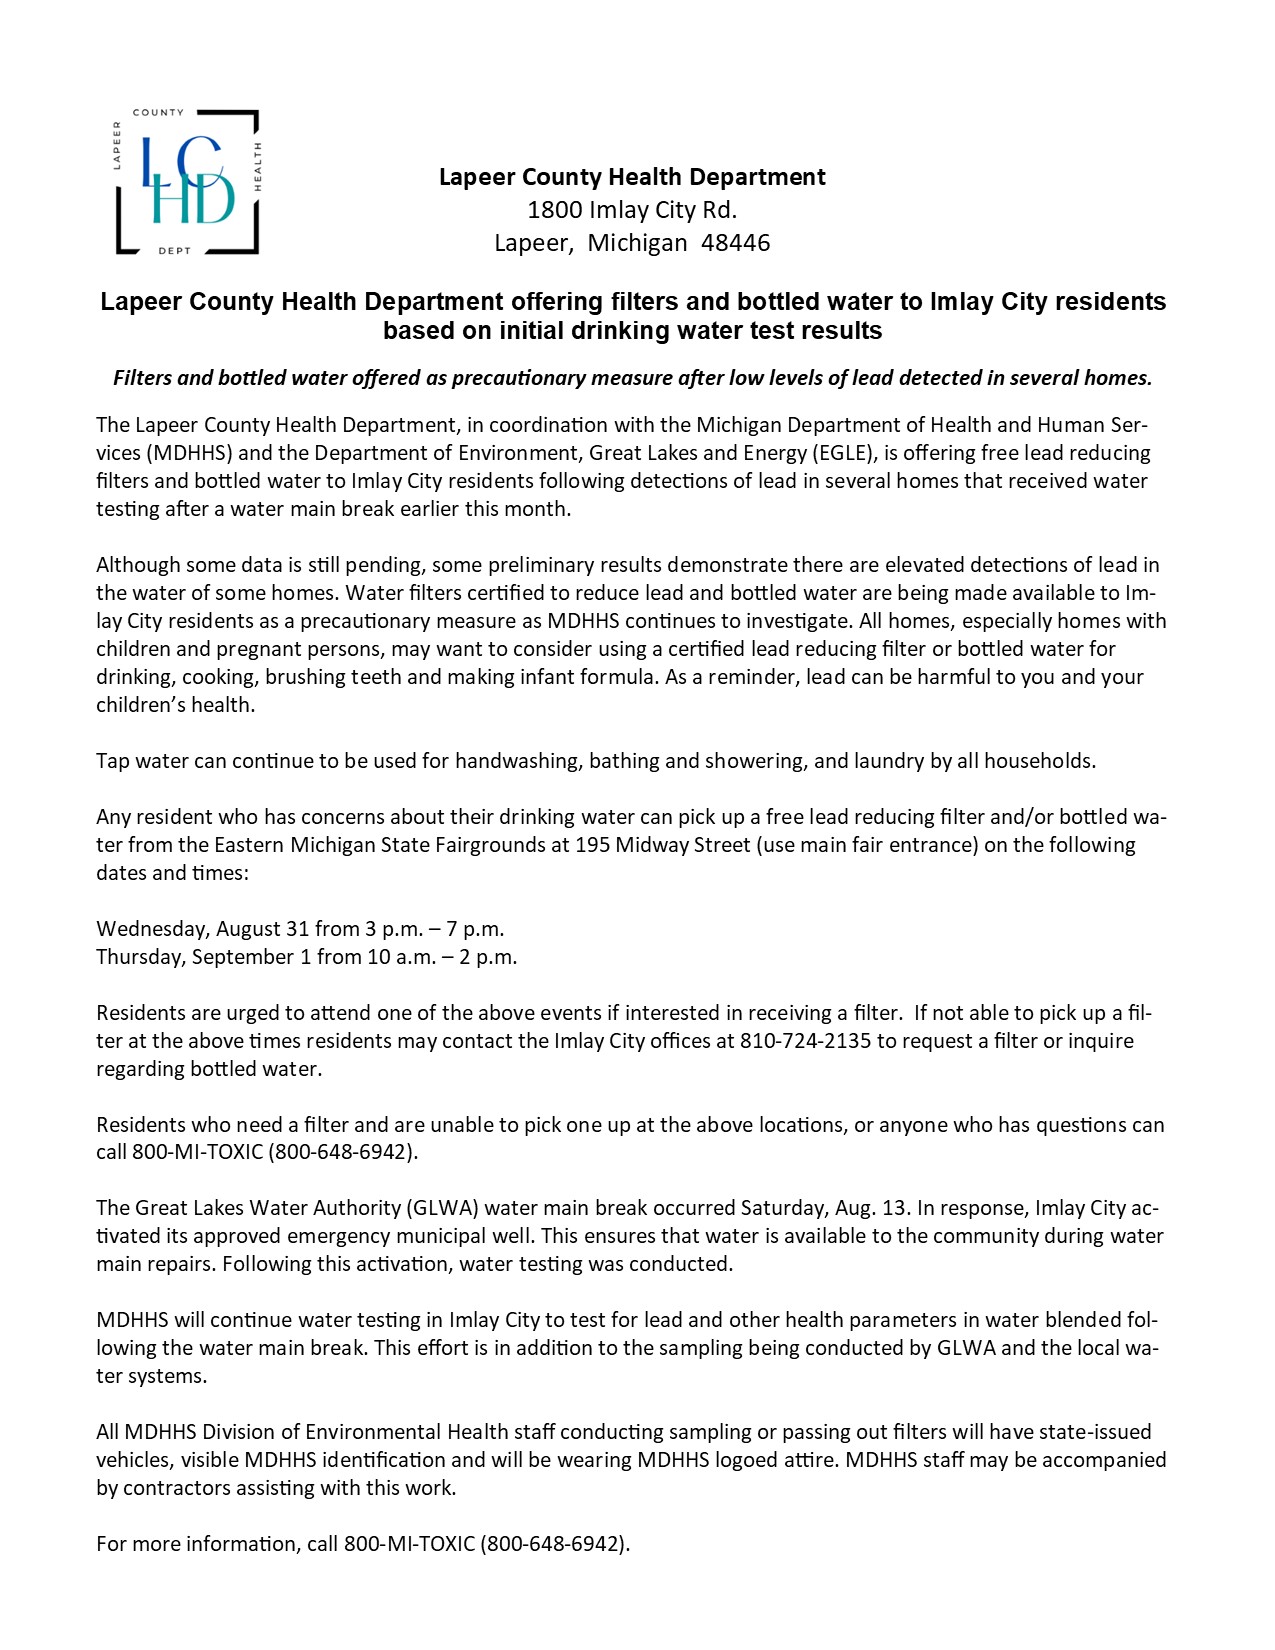 imlay city press release 2022